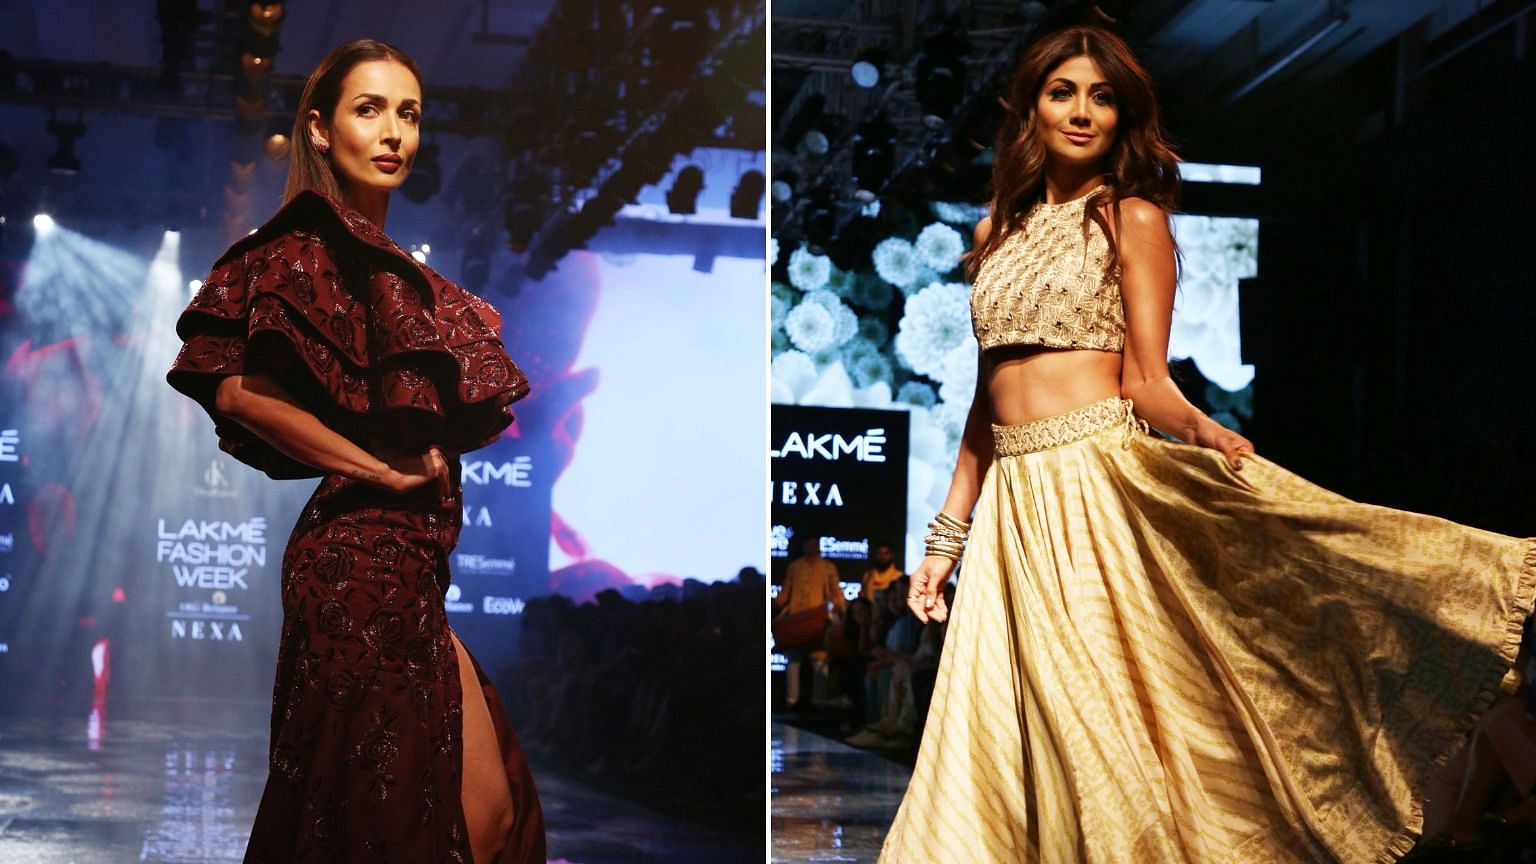 Malaika Arora and Shilpa Shetty walk the ramp at Lakme Fashion Week 2019.